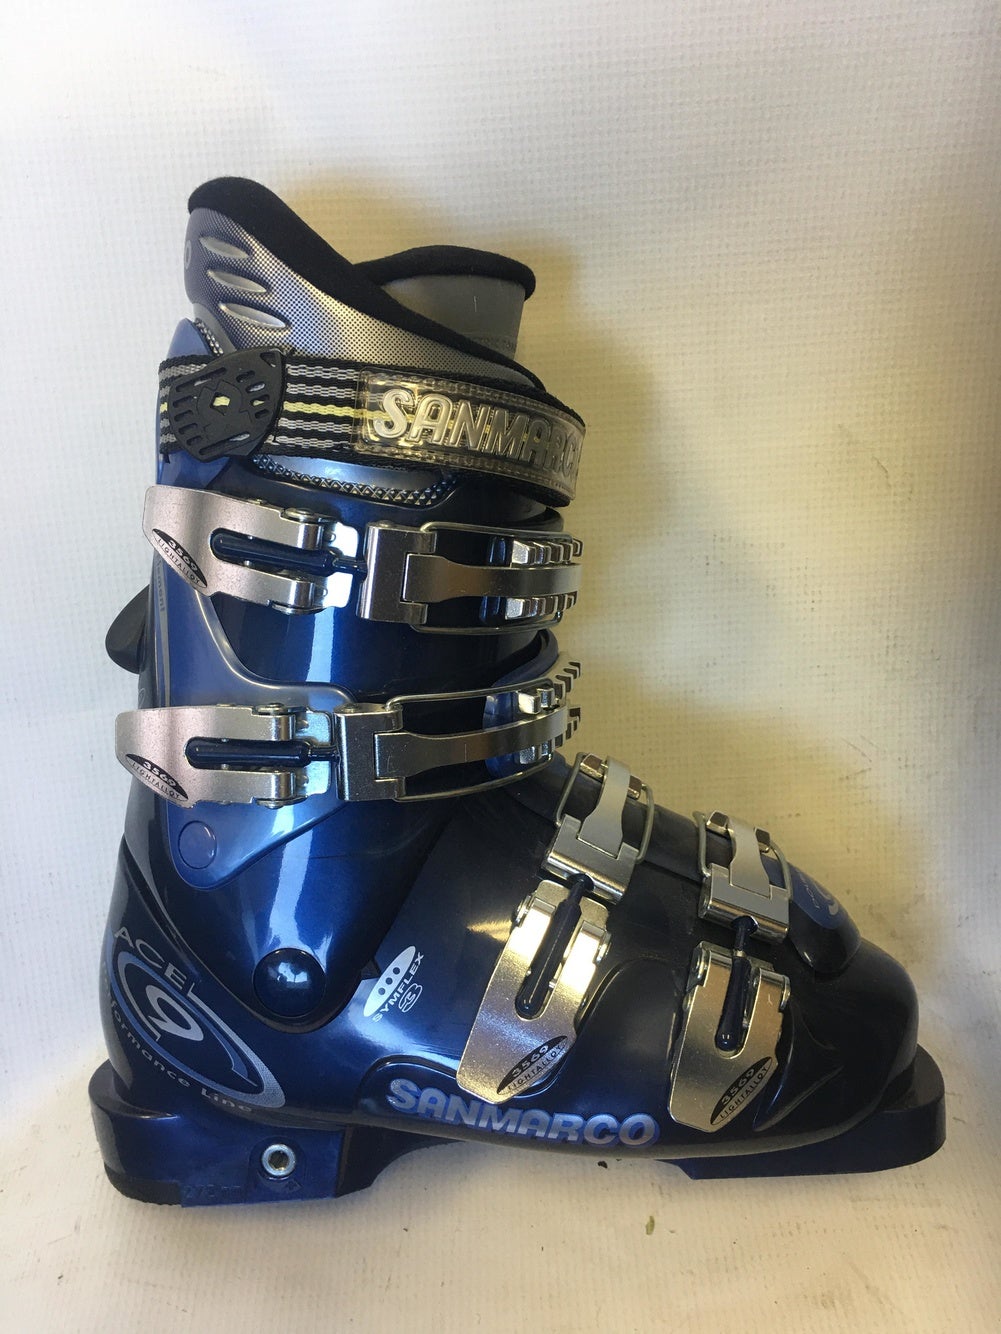 Intermediate-Advanced SanMarco Adjustable Flex Ski boots SIZES 23-27.5BLK/YELLOW 